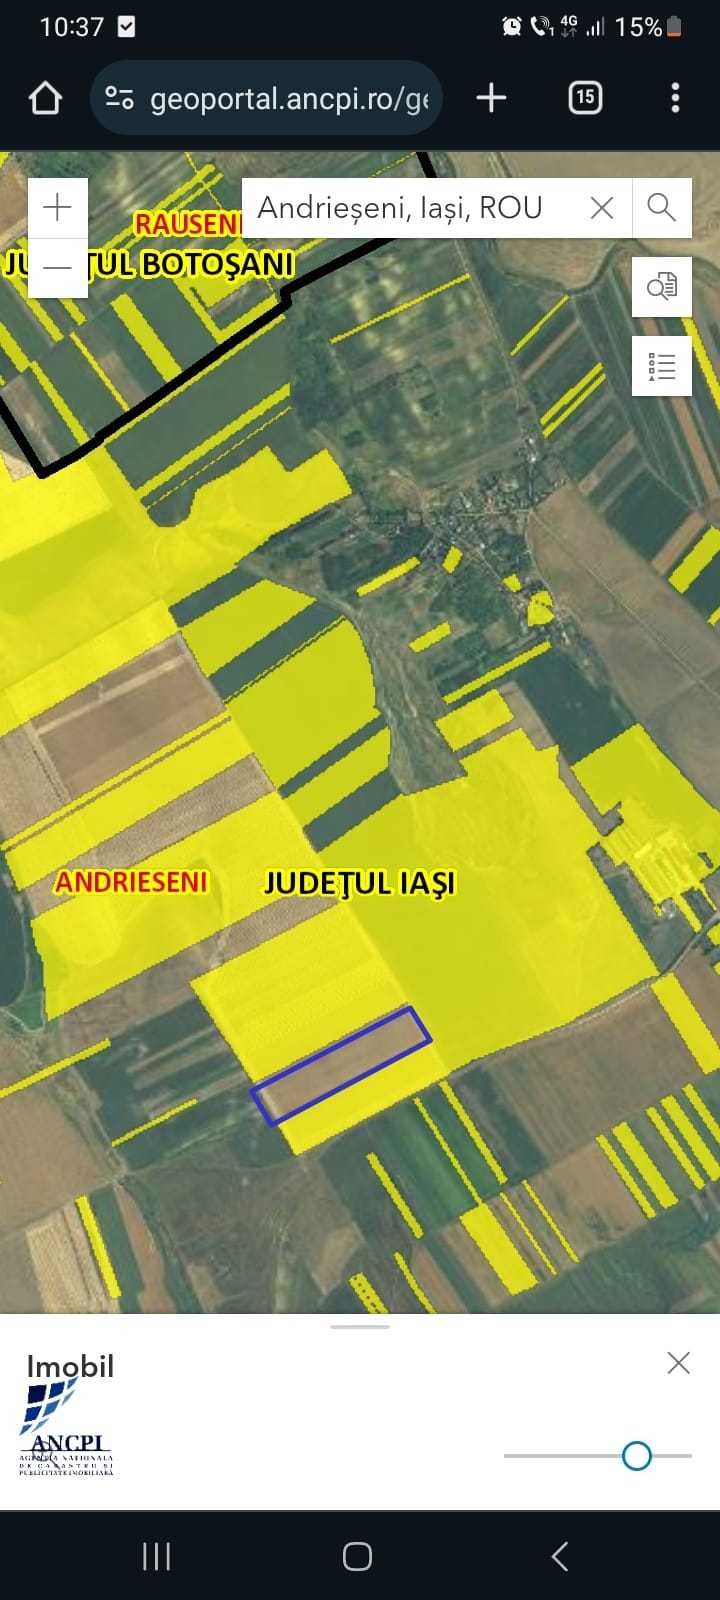 Vand 6,66 hectare teren arabil Andrieseni Judetul Iasi spre Botosani